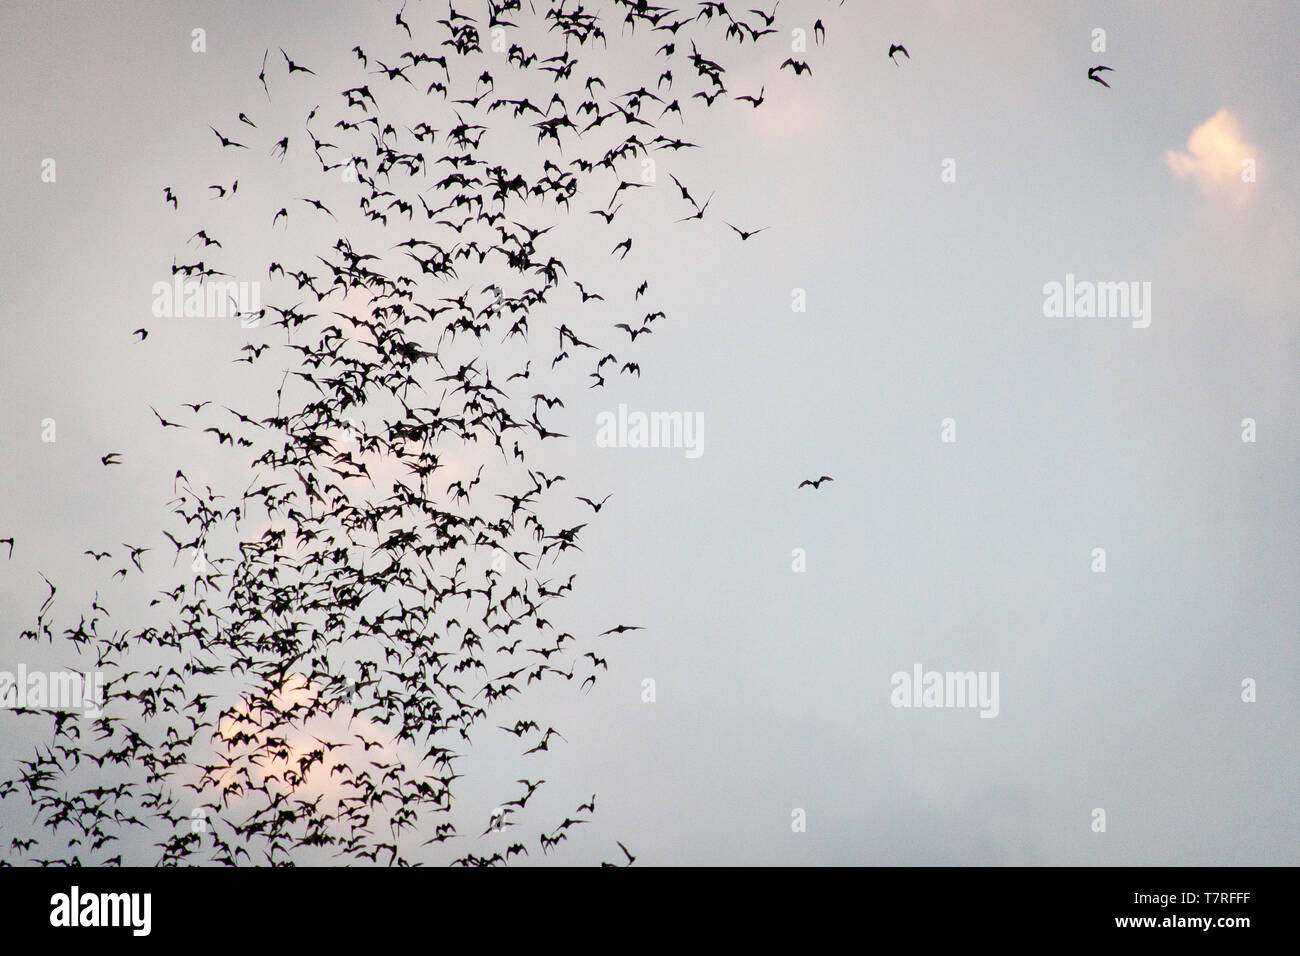 Bats flying from a bat cave near Battambang, Cambodia Stock Photo